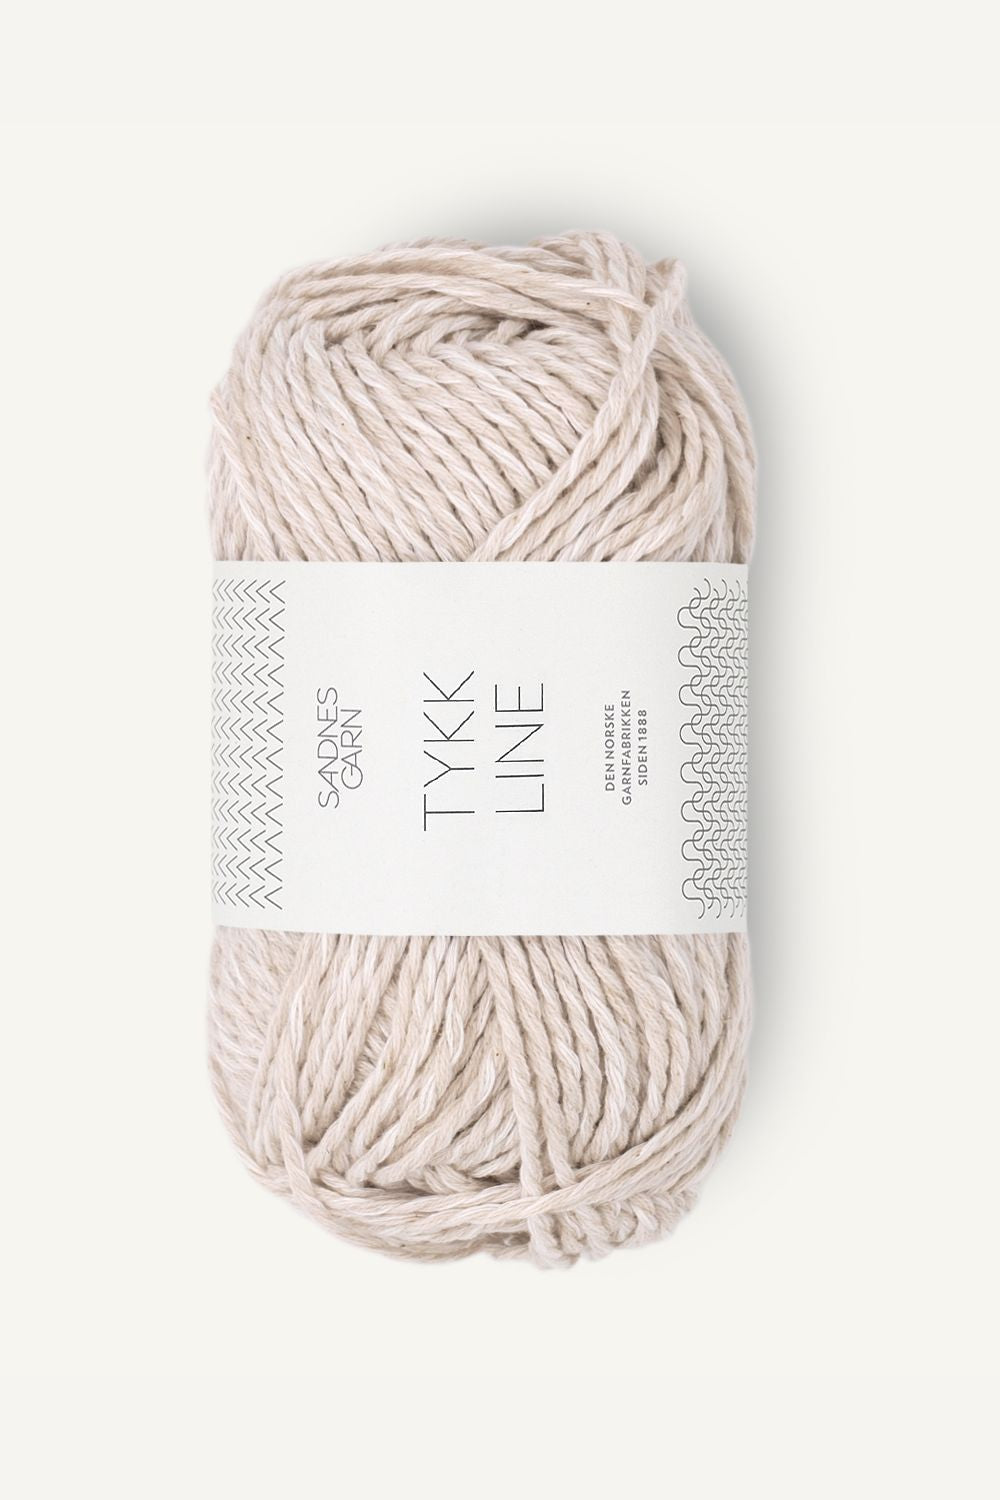 Republik Hovedløse offer Sandnes Garn Tykk Line – Tea Cozy Yarn Shop